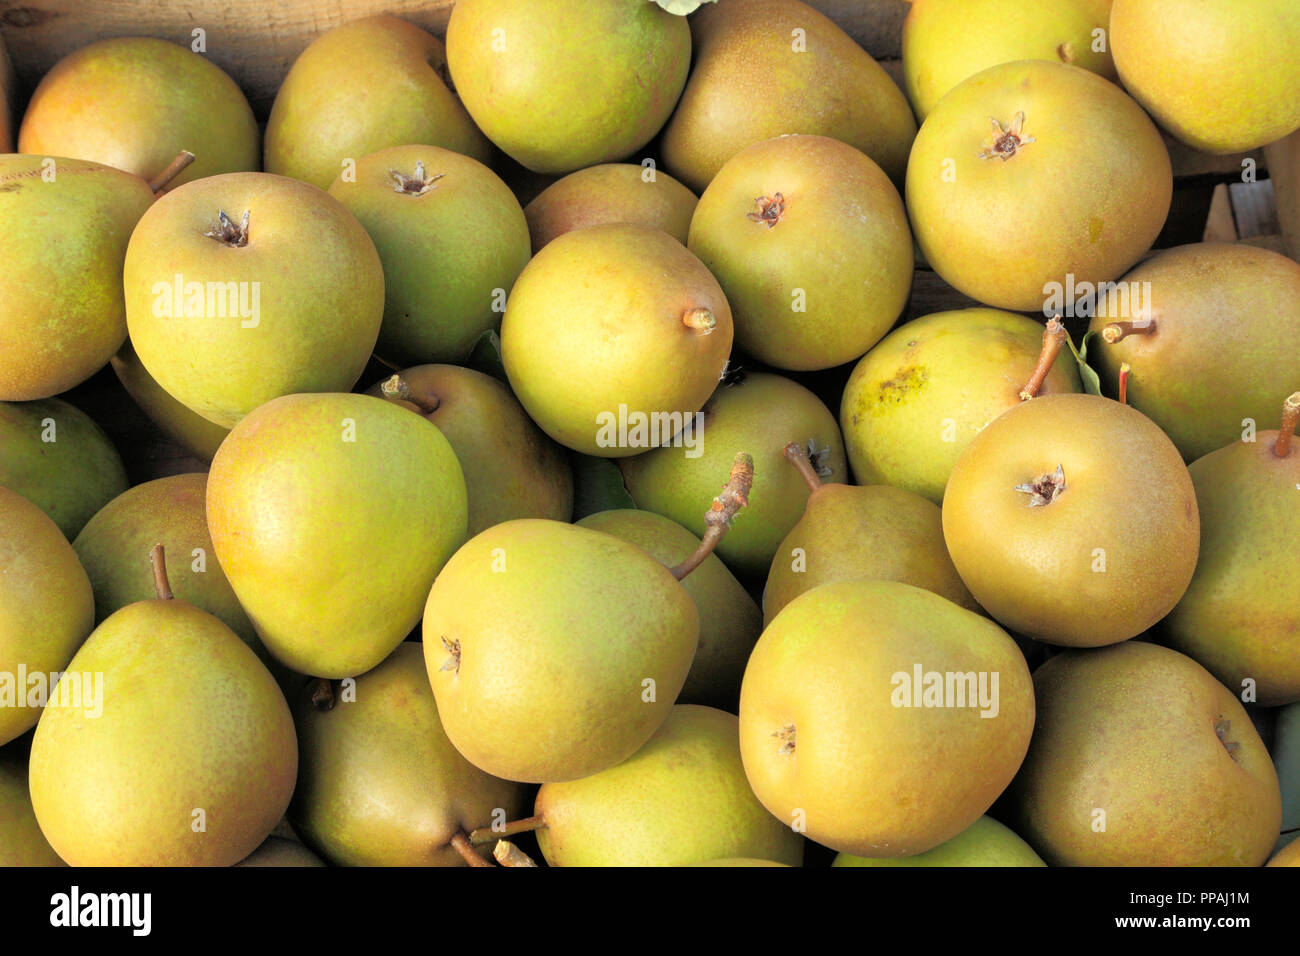 Apple, Beurre Hardy, Äpfel, Farm Shop Anzeige, Malus Domestica, essbare, Obst Stockfoto